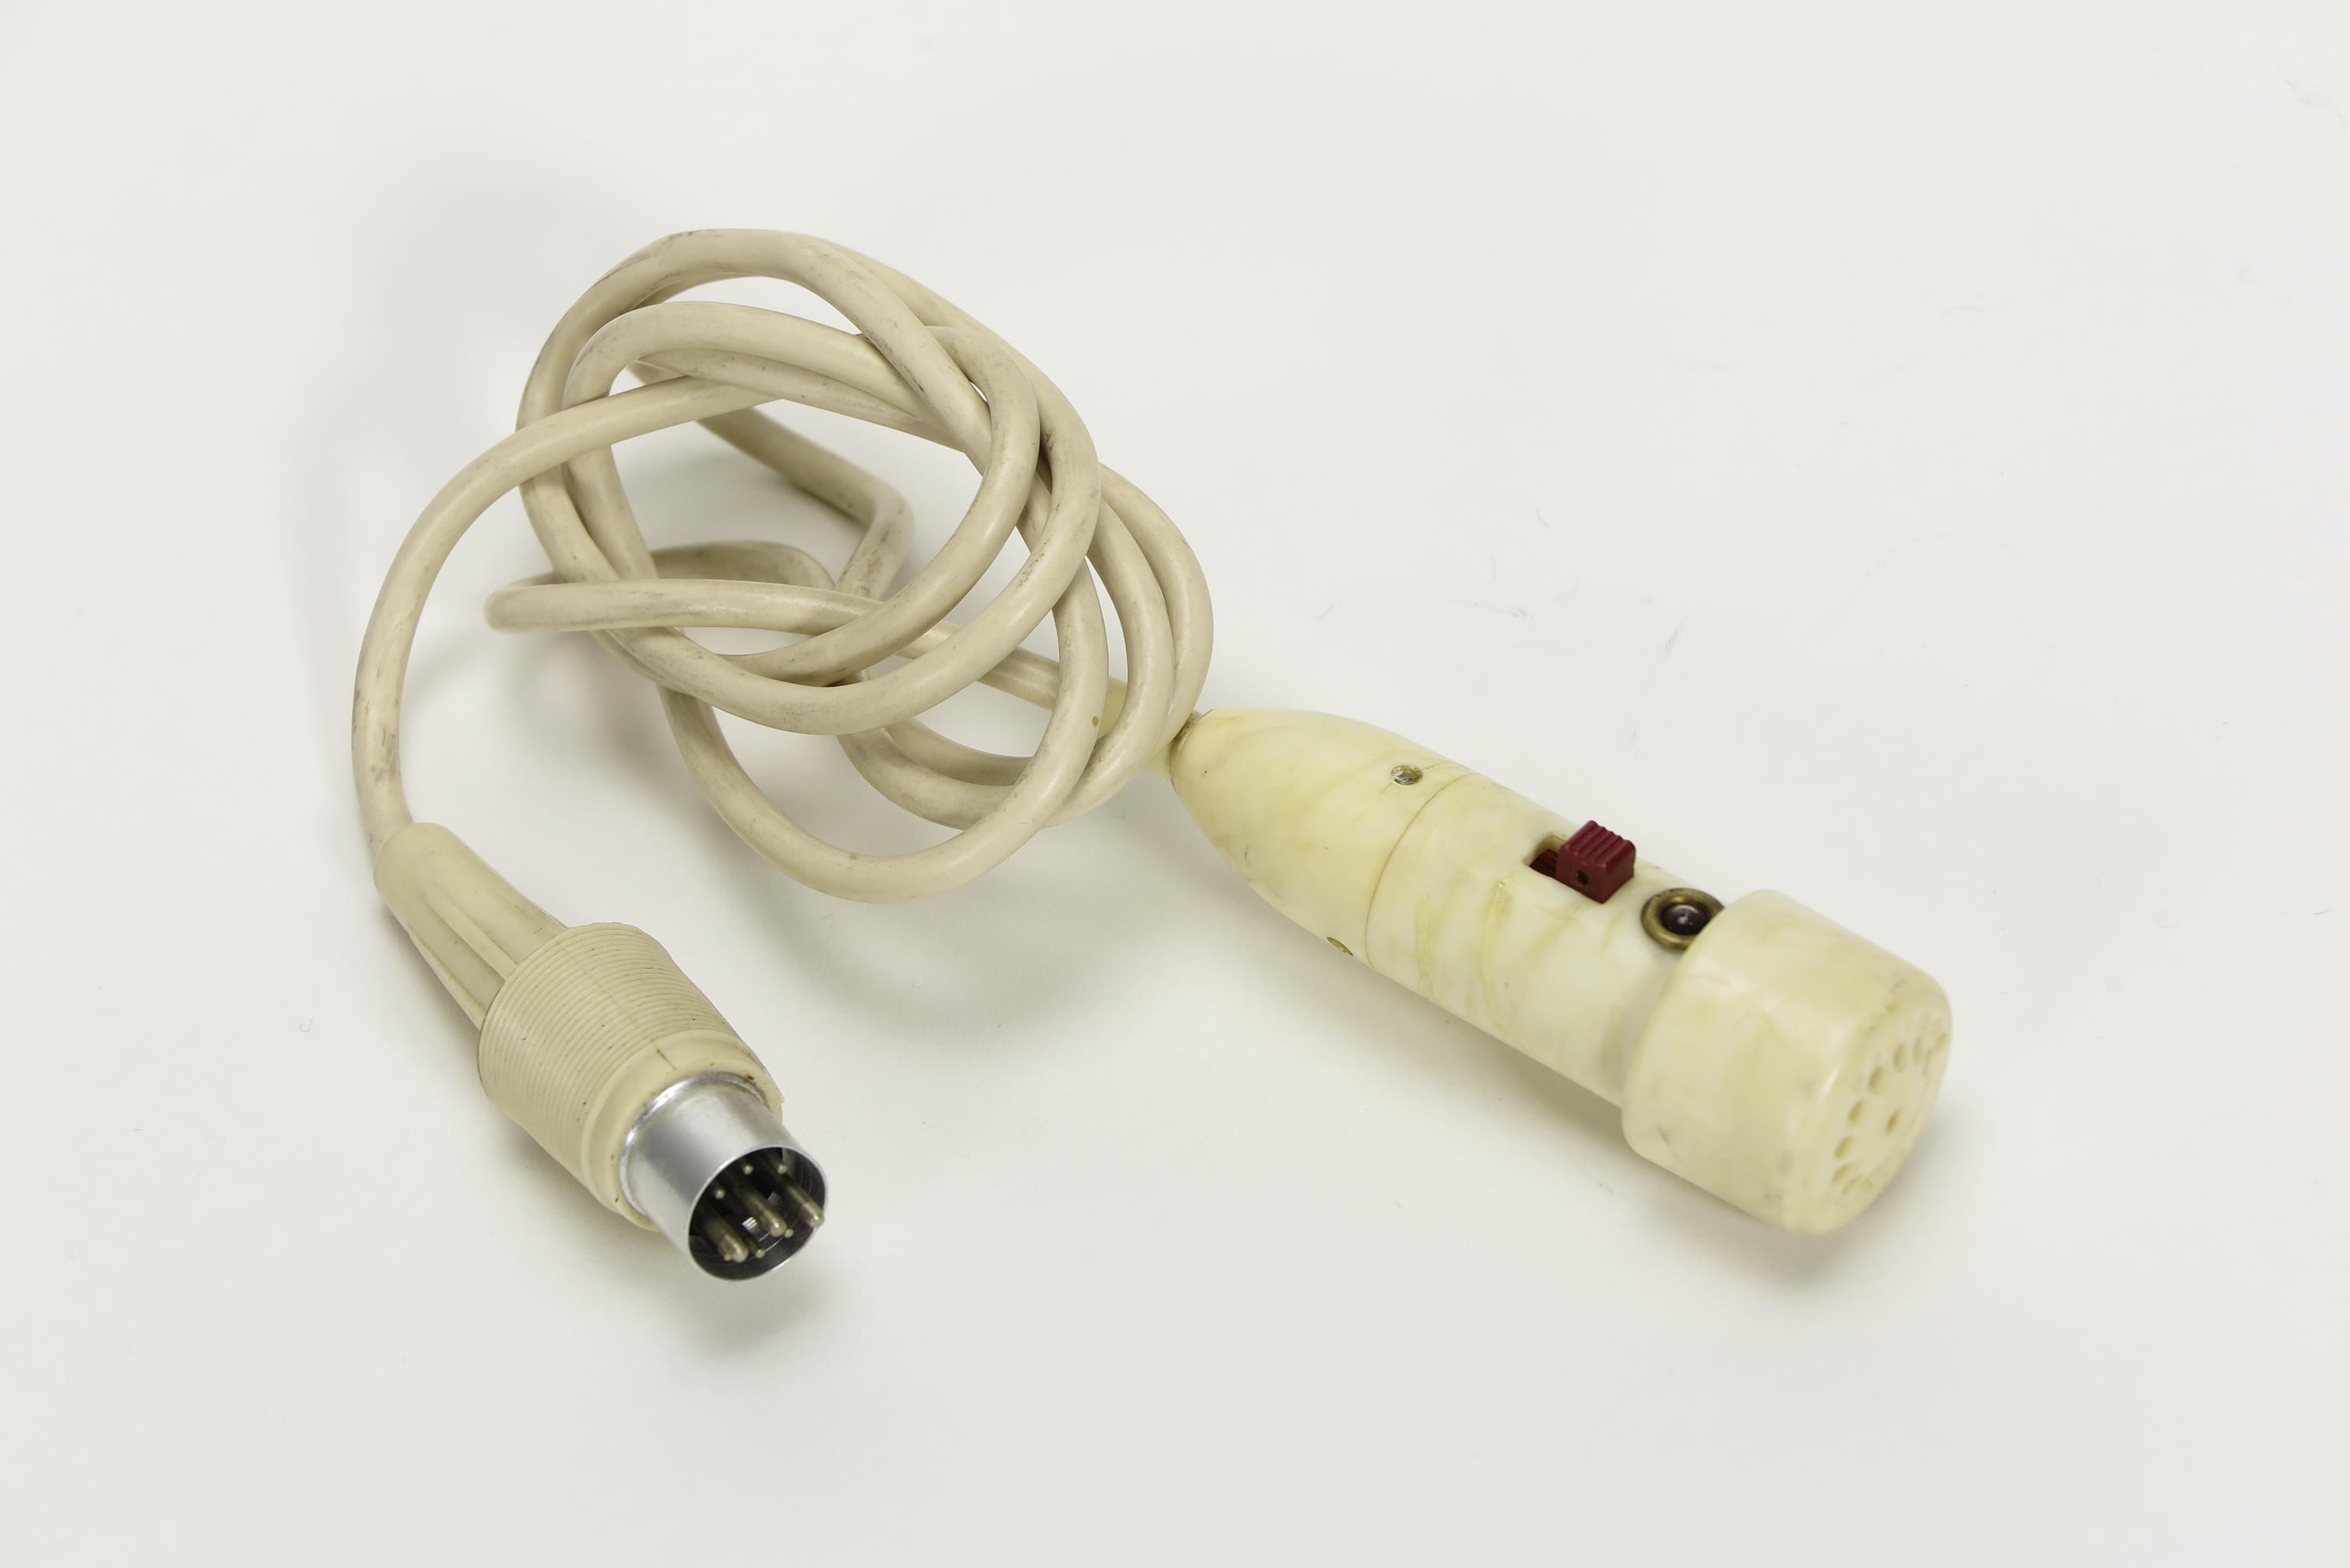 Zubehör zu Protona Minifon, Spezial-Flugzeug-Mikrofon (Deutsches Technikmuseum CC BY)